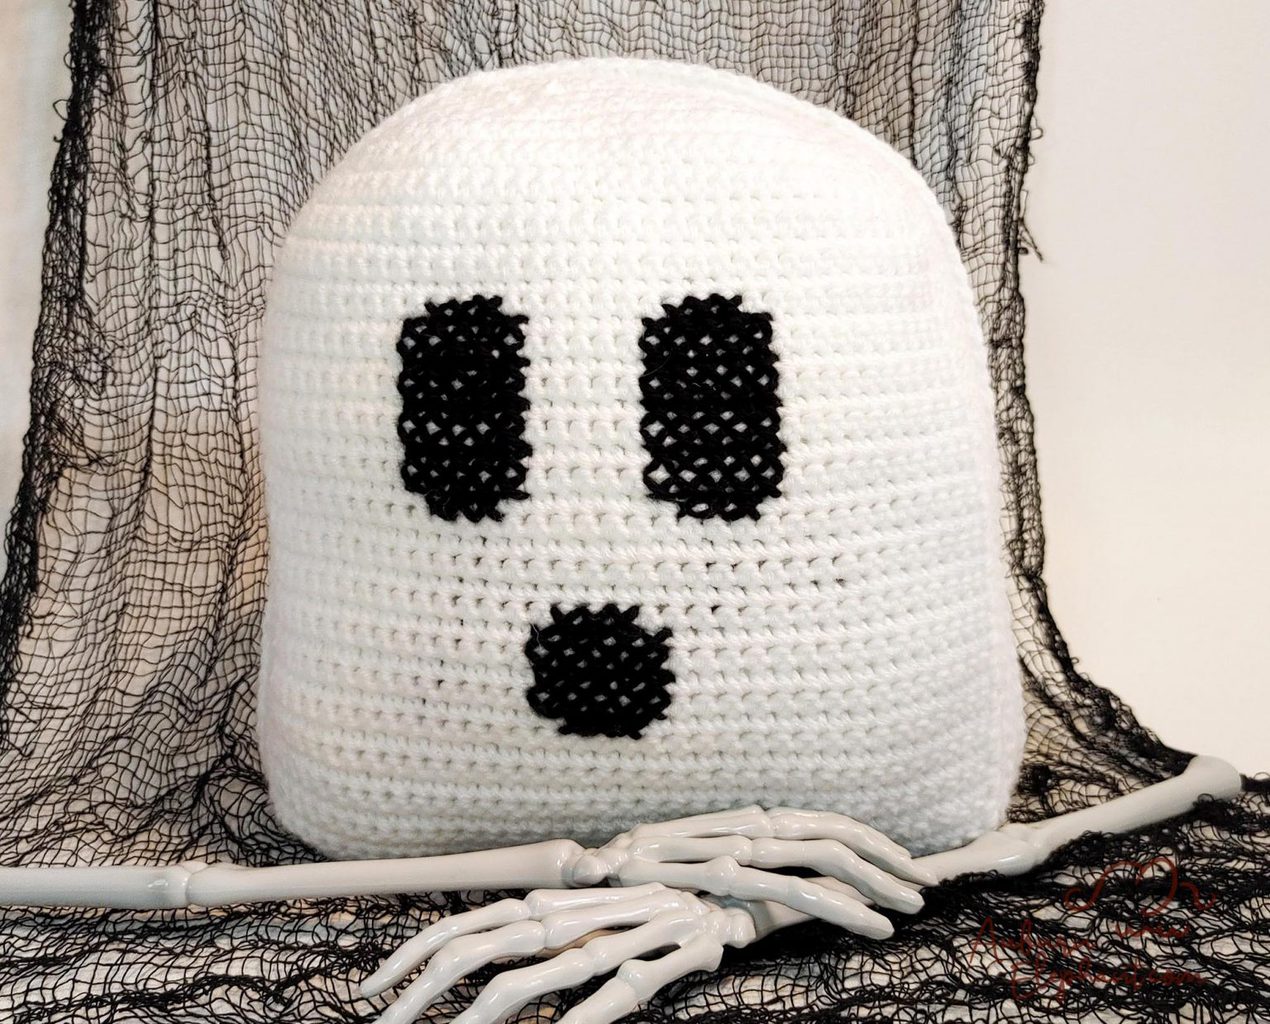 Crochet Ghost Patterns for Halloween (Cute + Easy!) - Easy Crochet Patterns